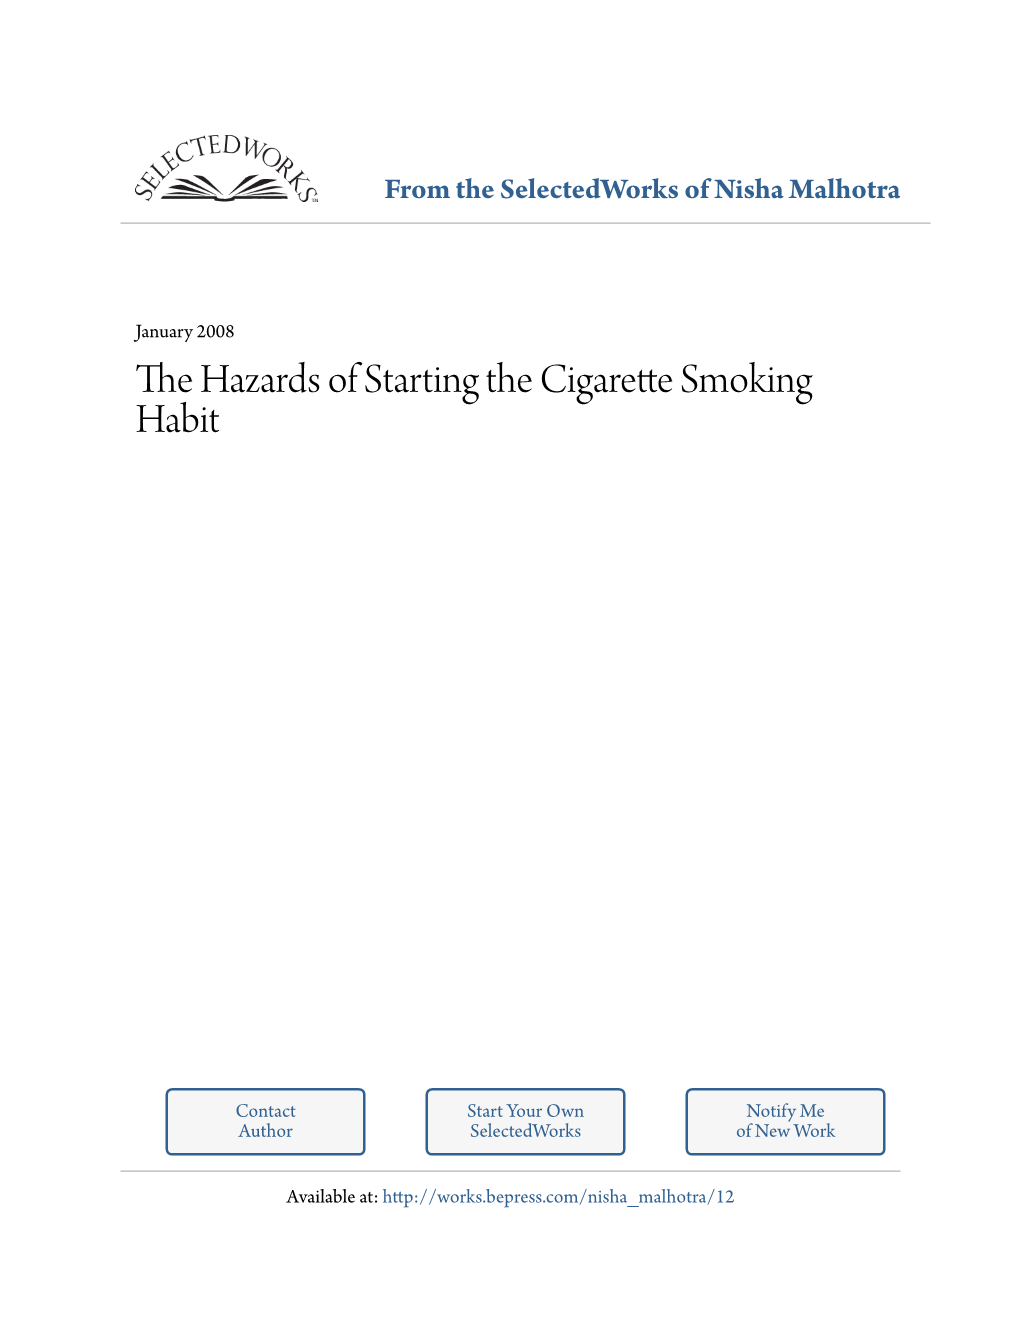 The Hazards of Starting the Cigarette Smoking Habit